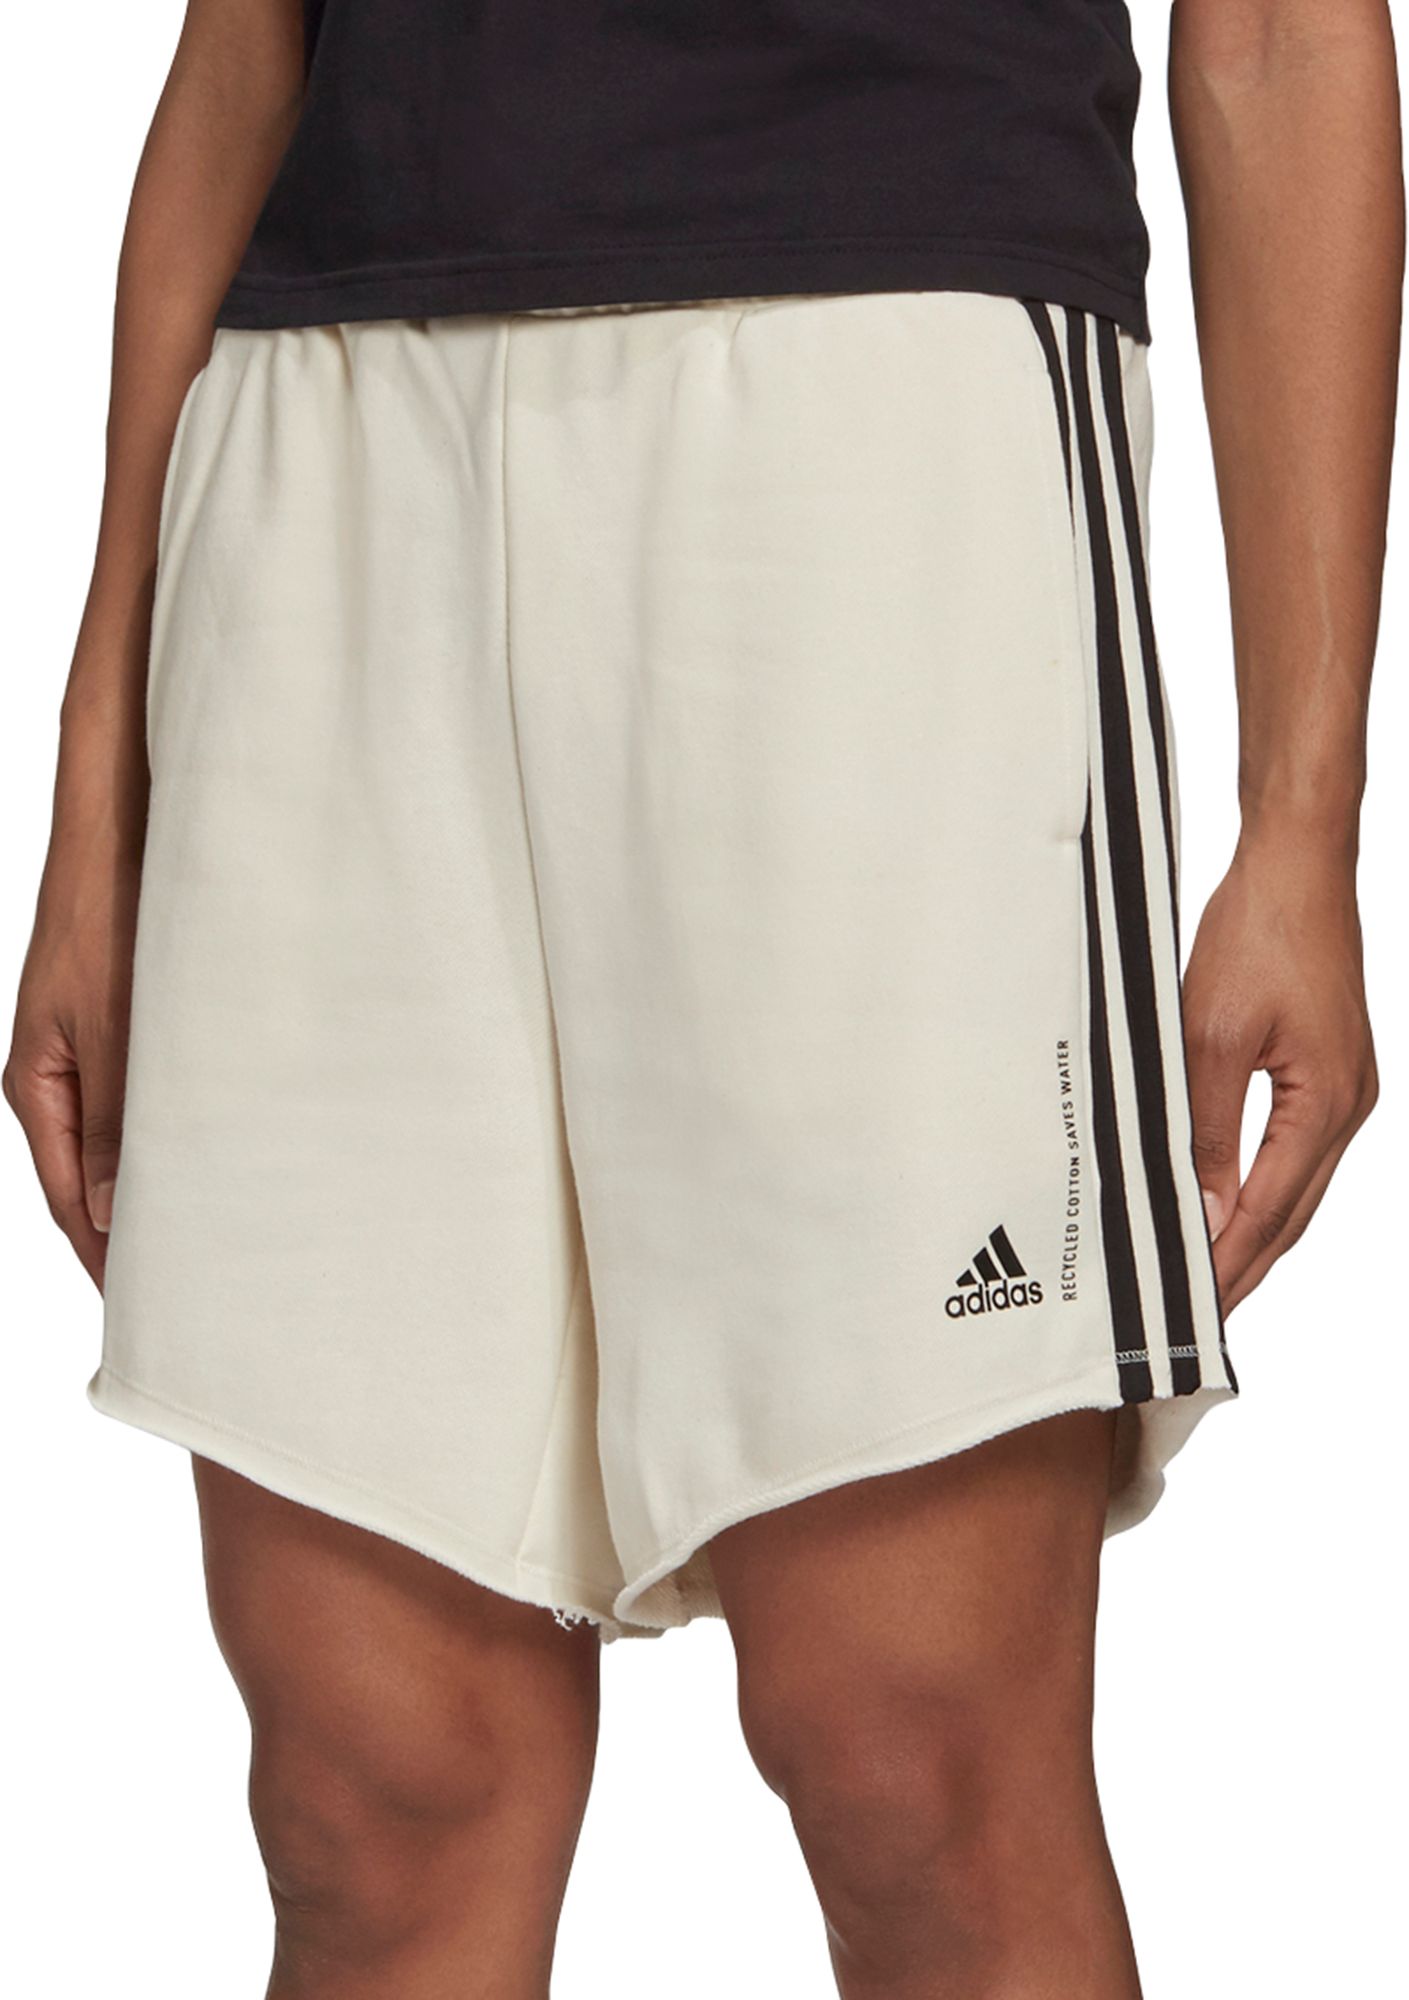 adidas 3 stripe cotton shorts